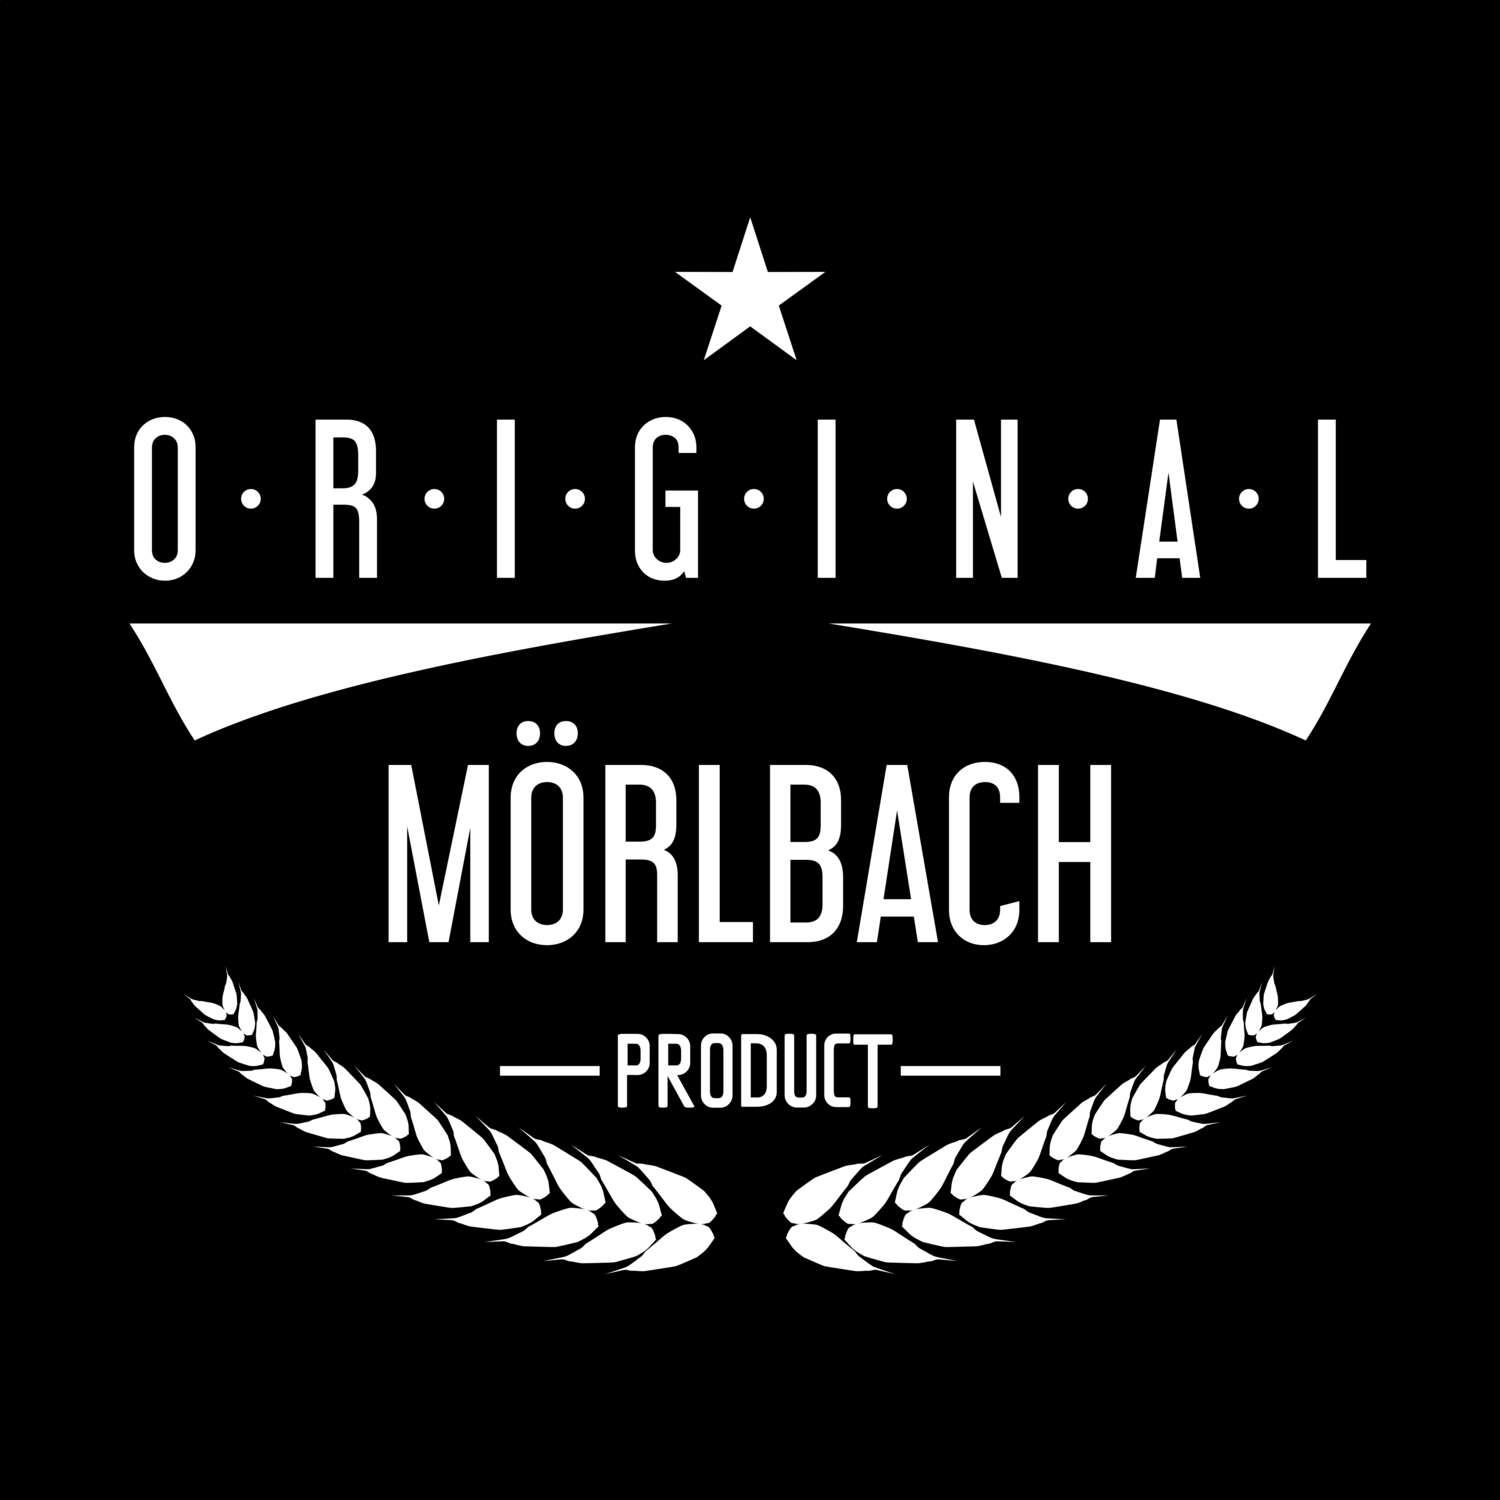 Mörlbach T-Shirt »Original Product«